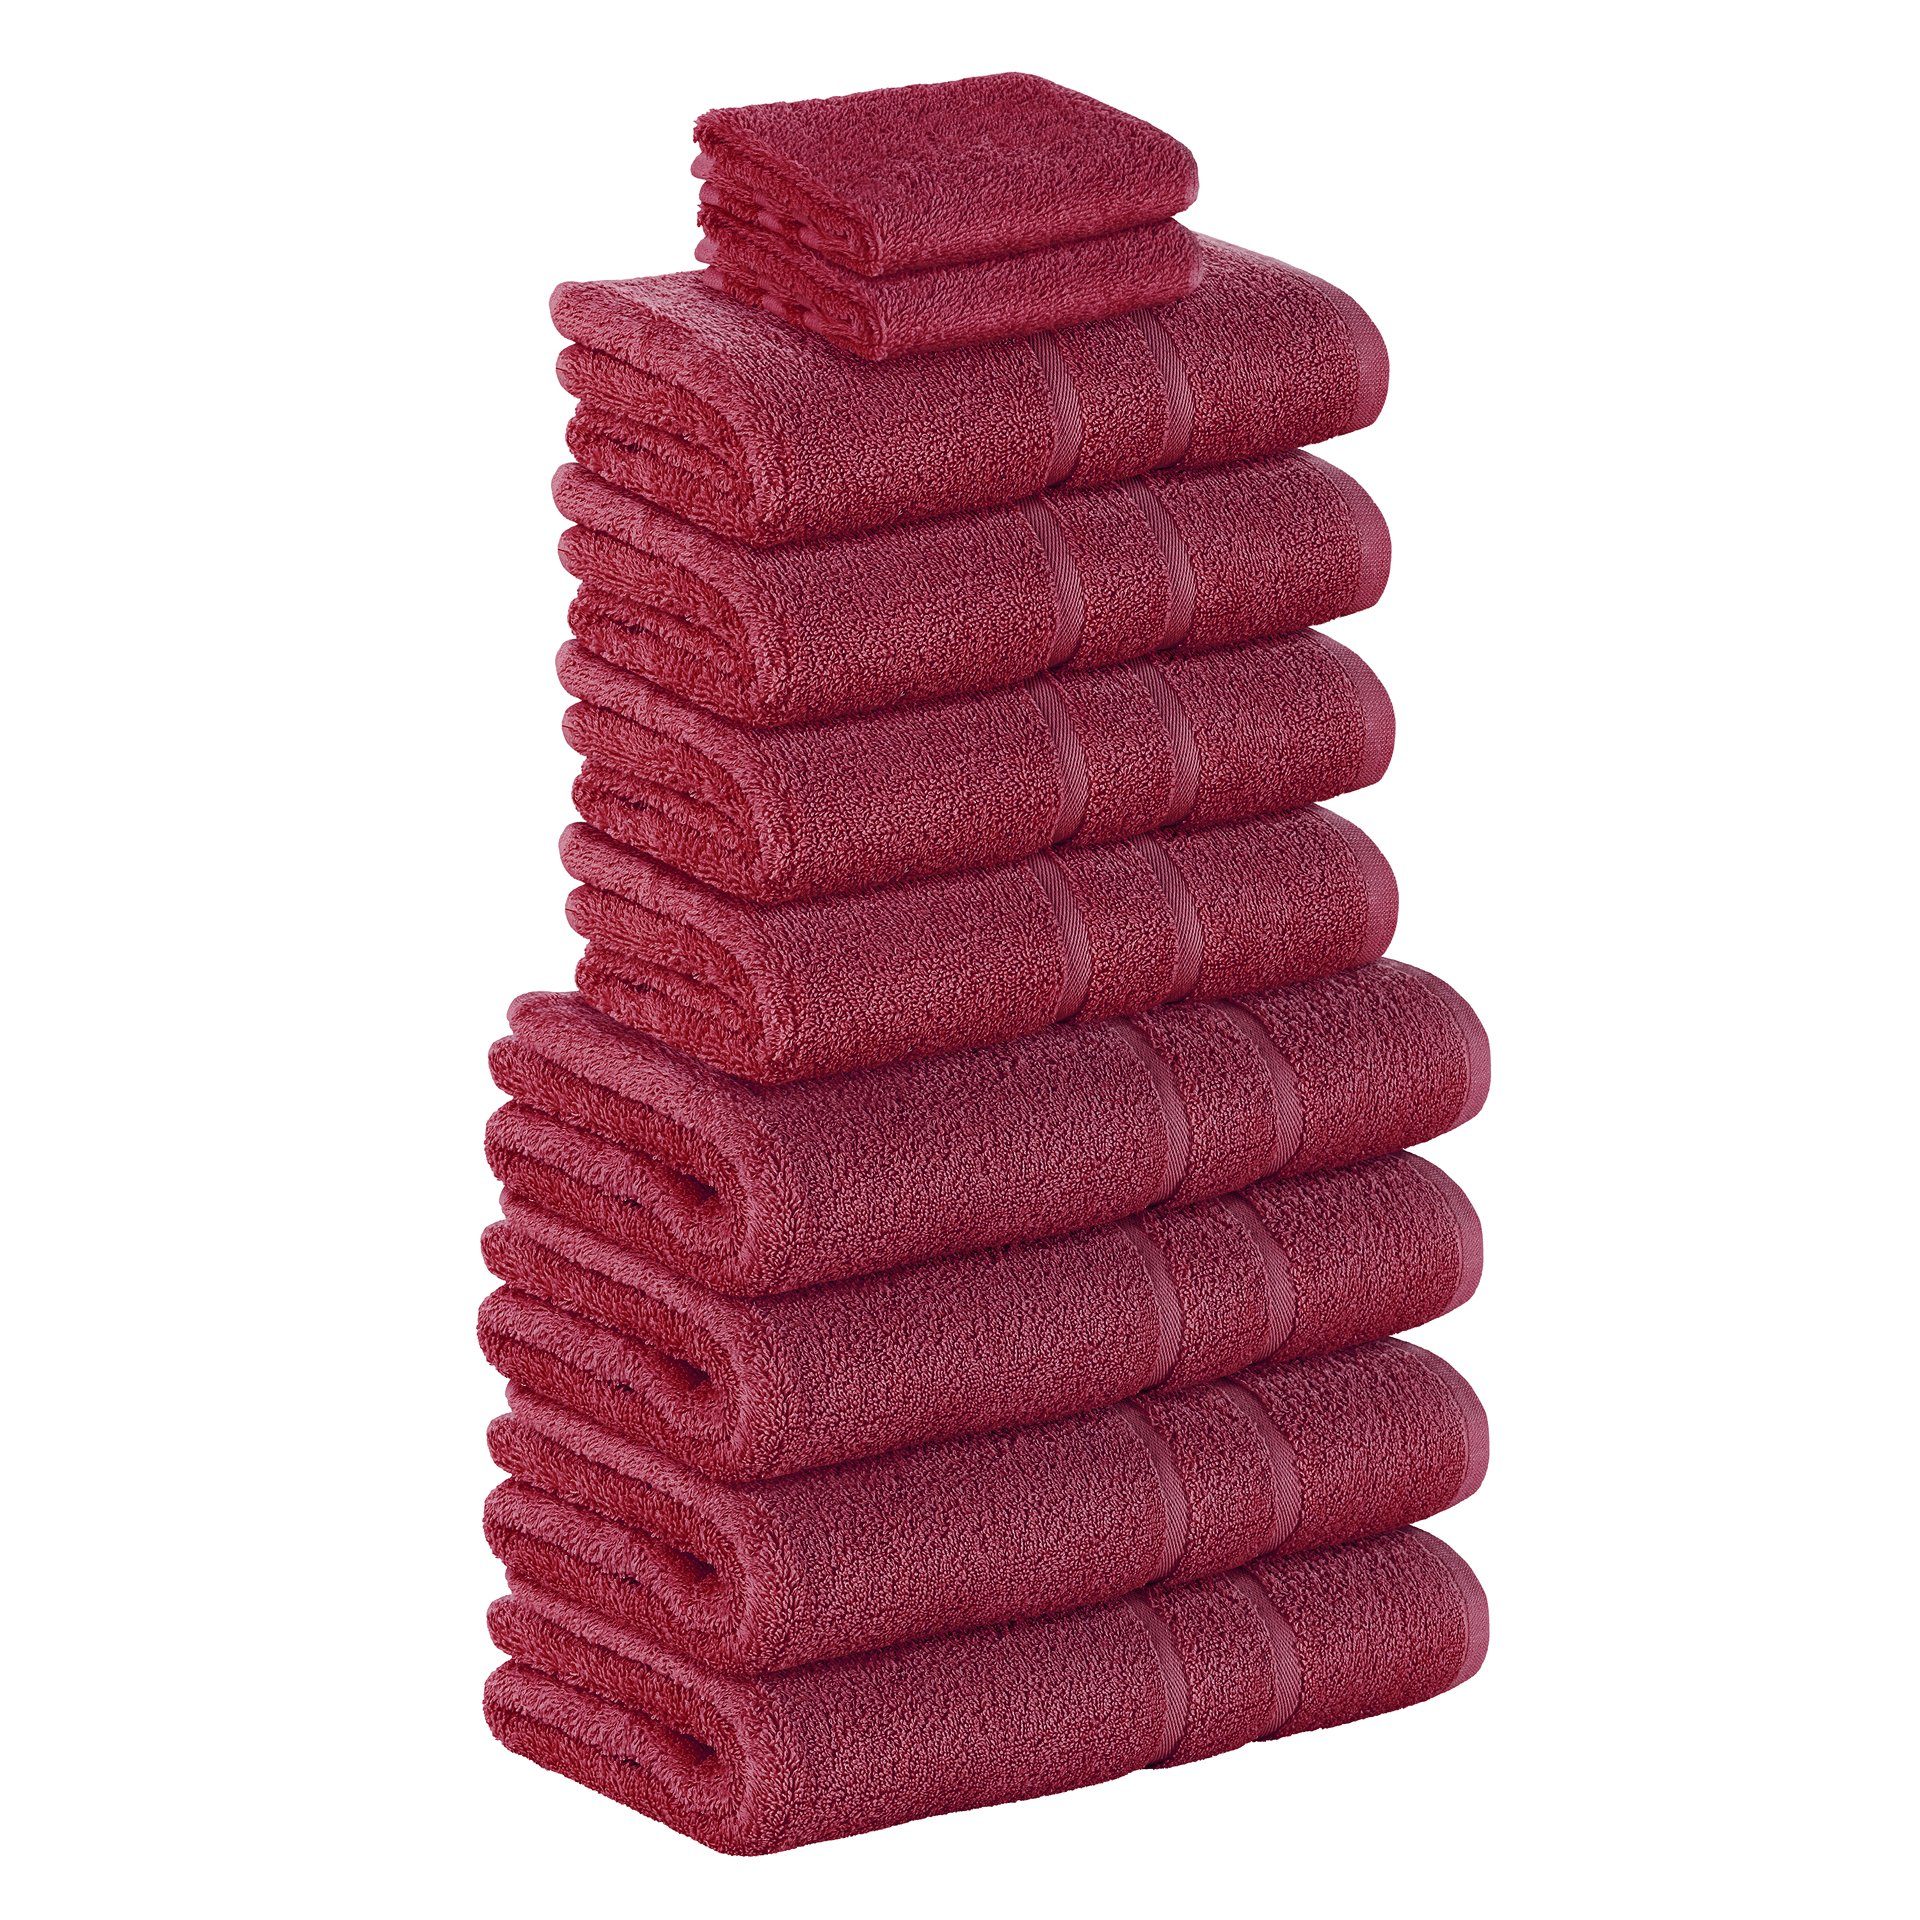 StickandShine Handtuch Set 2x Gästehandtuch 4x Handtücher 4x Duschtücher als SET in verschiedenen Farben (10 Teilig) 100% Baumwolle 500 GSM Frottee 10er Handtuch Pack, (Spar-set), 100% Baumwolle 500 GSM Bordeaux